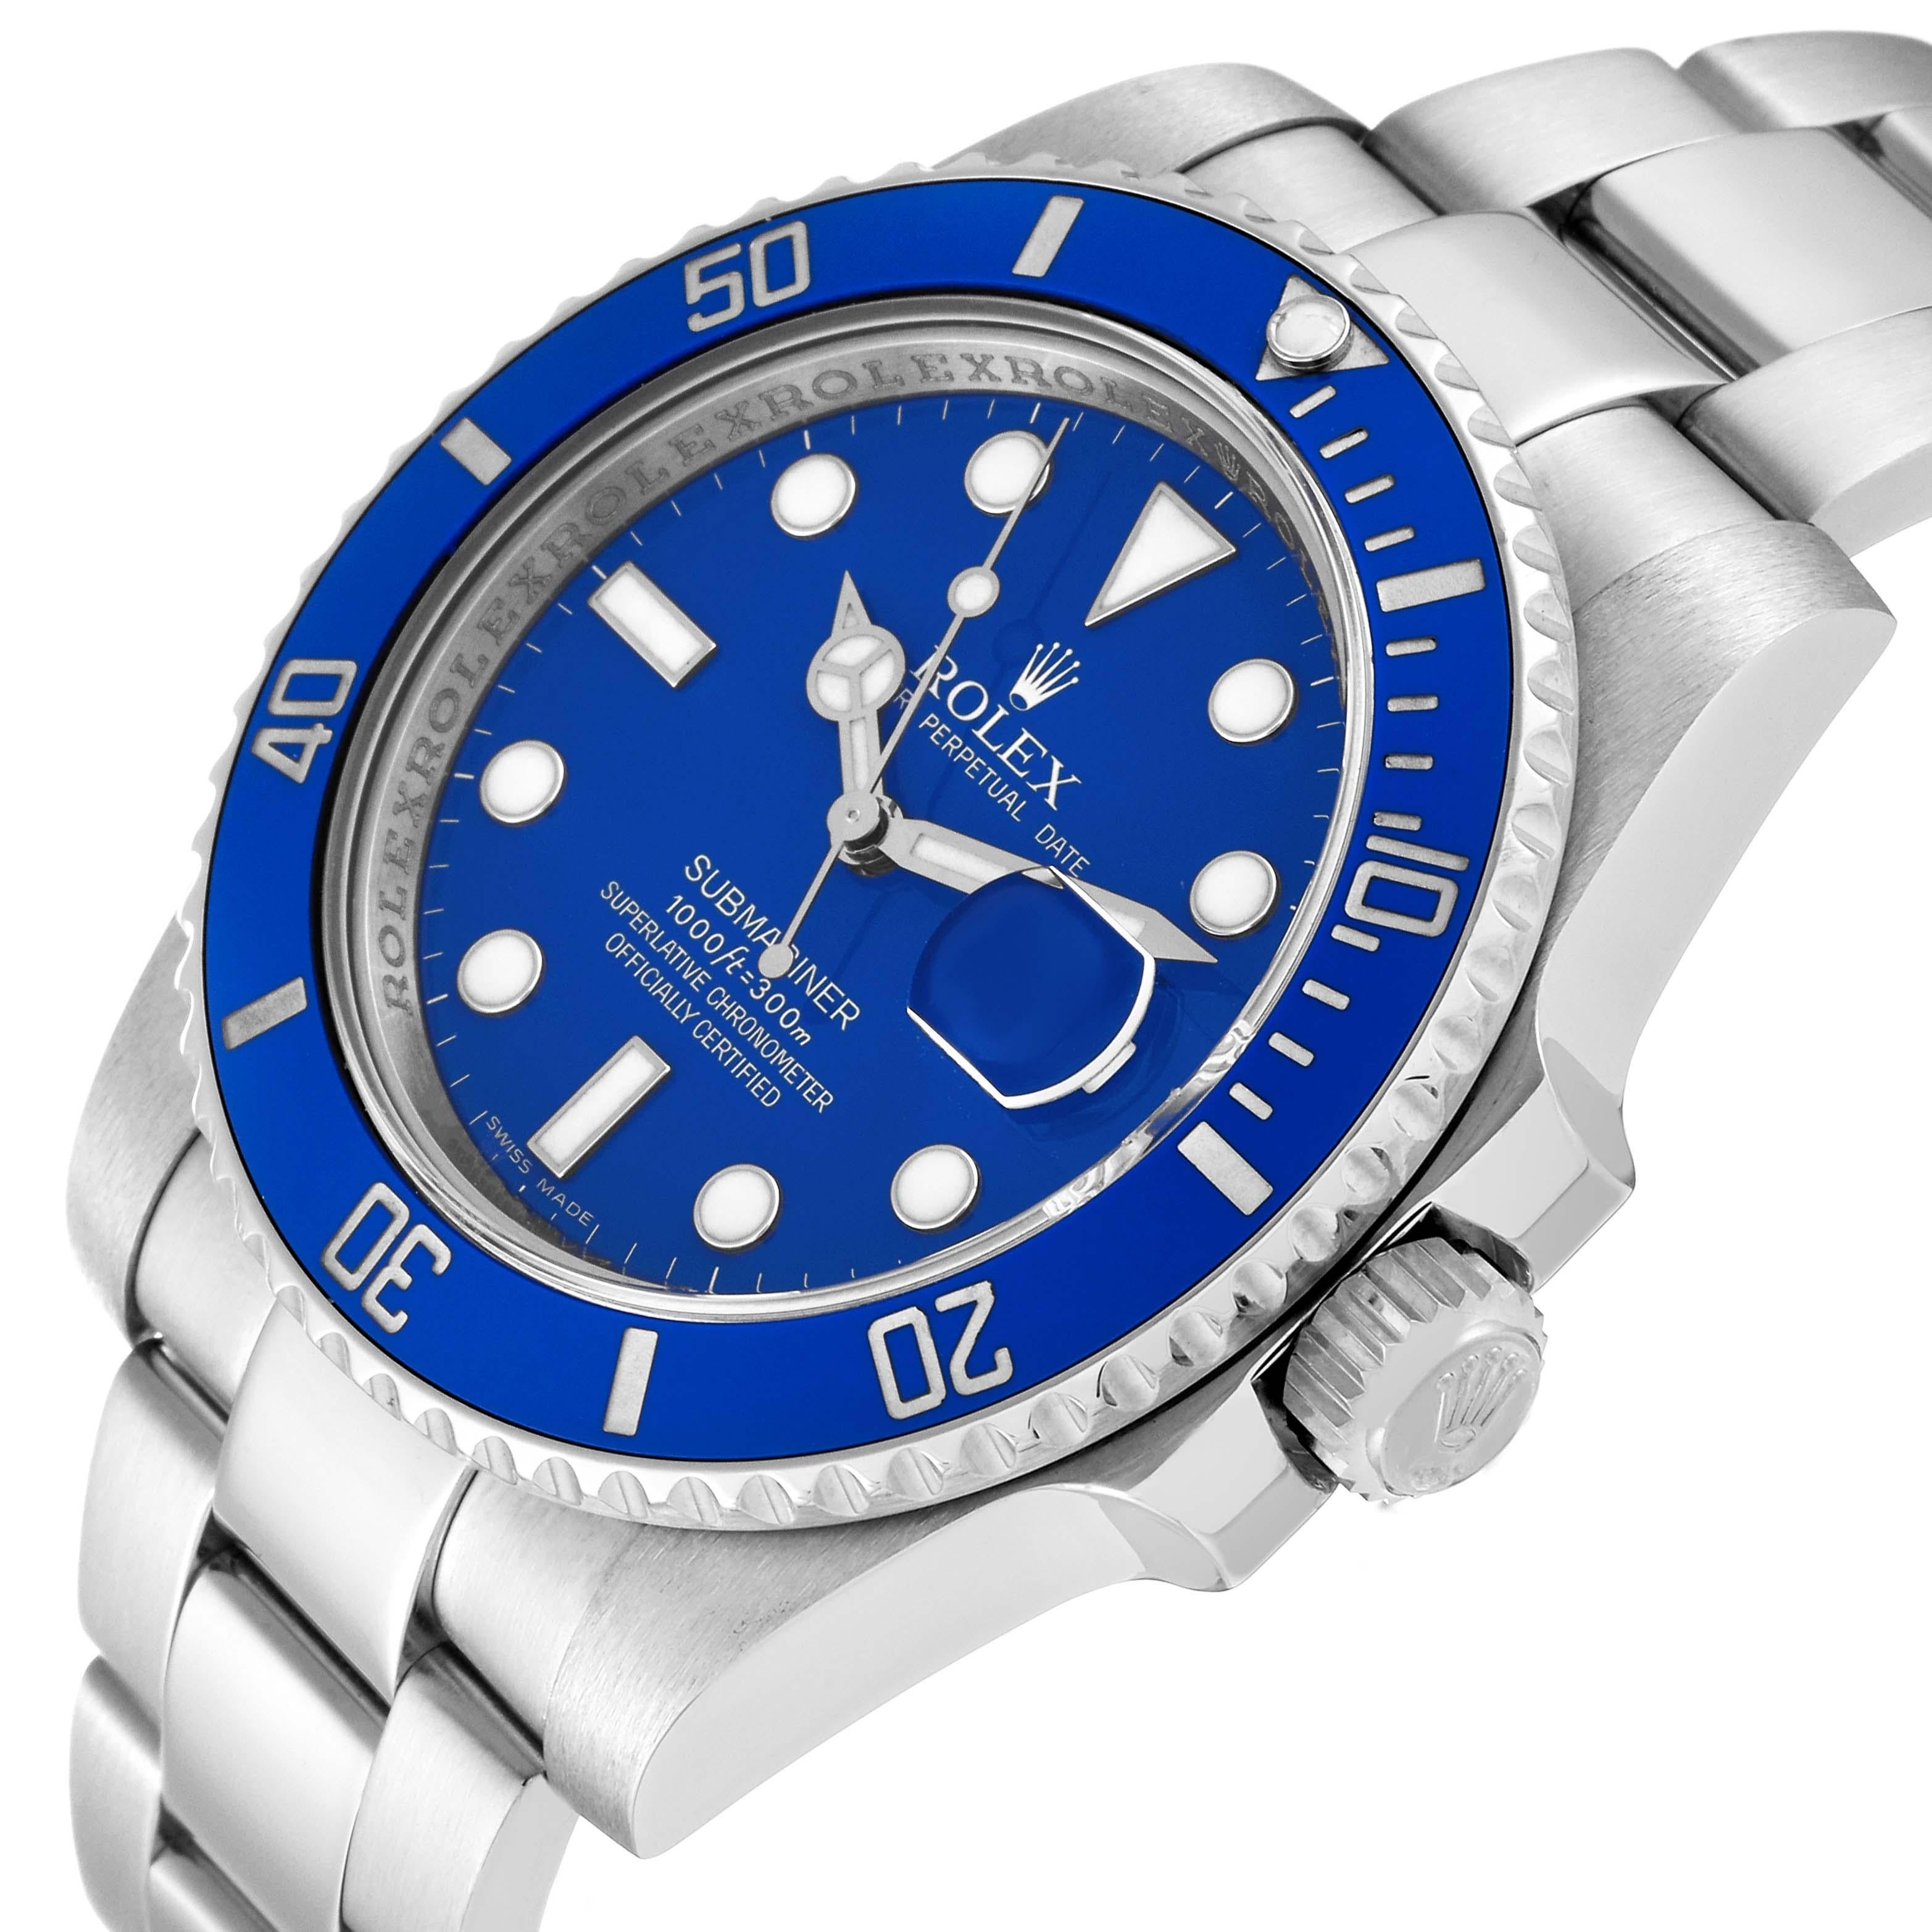 Rolex Submariner White Gold Blue Dial Ceramic Bezel Mens Watch 116619 1